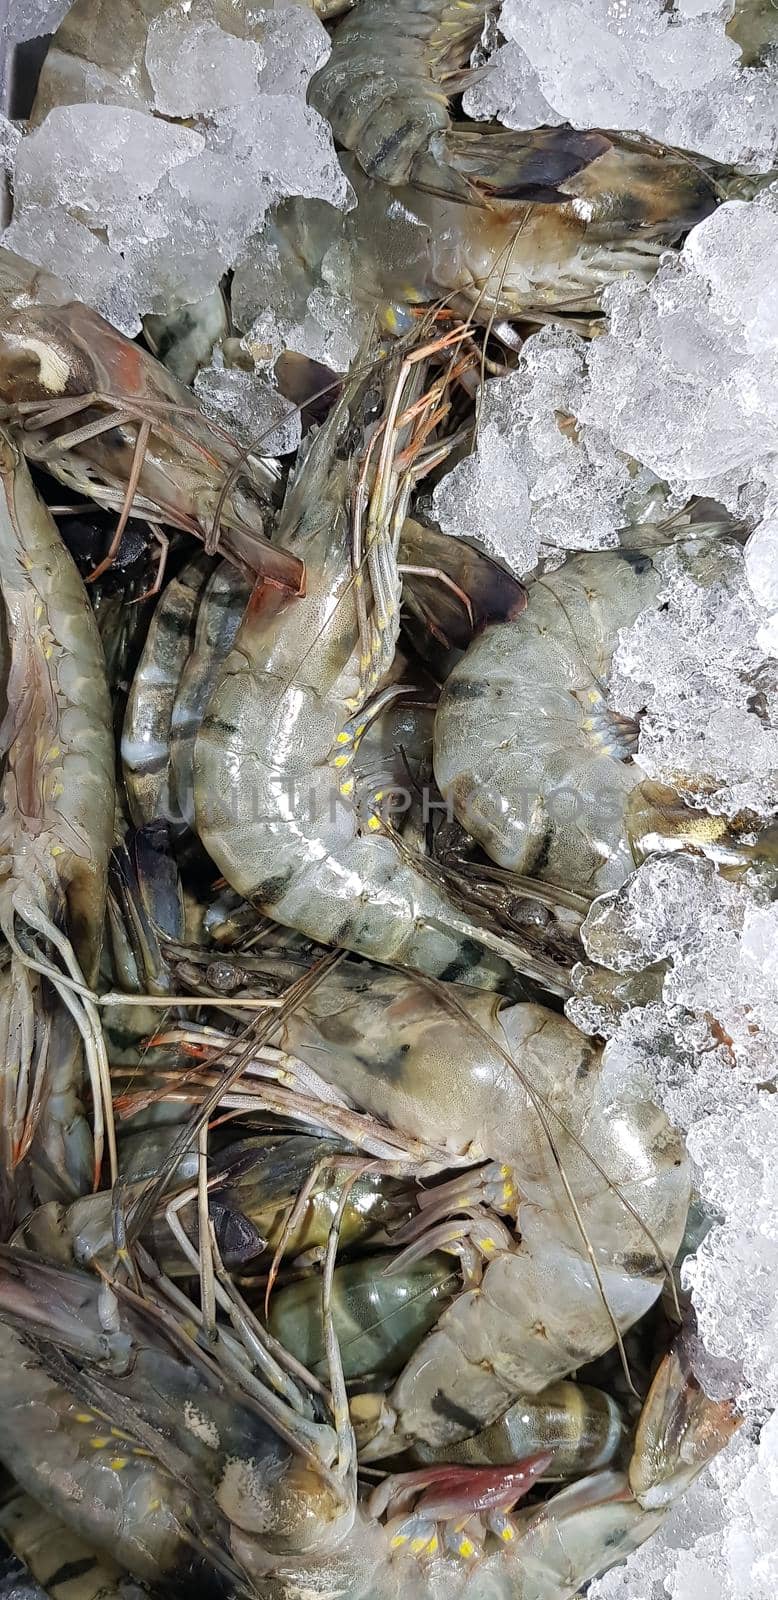 Fresh shrimp raw shrimp or crustacean or crustaceae from the market in indonesia